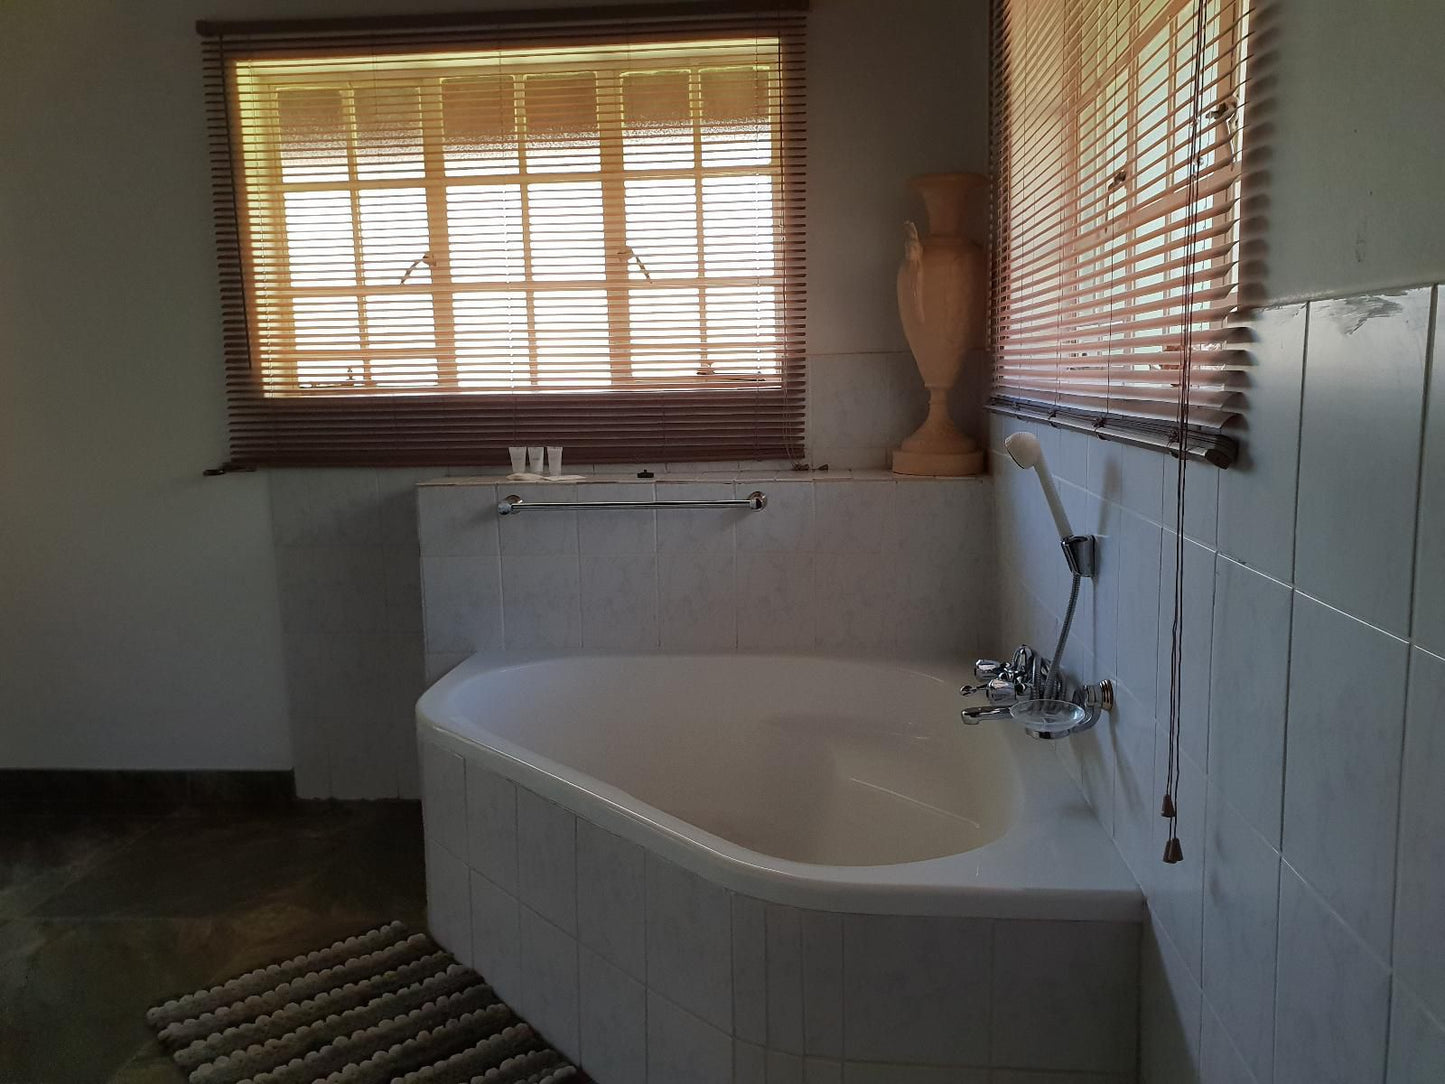 El Shadai Guest House Thabazimbi Thabazimbi Limpopo Province South Africa Bathroom